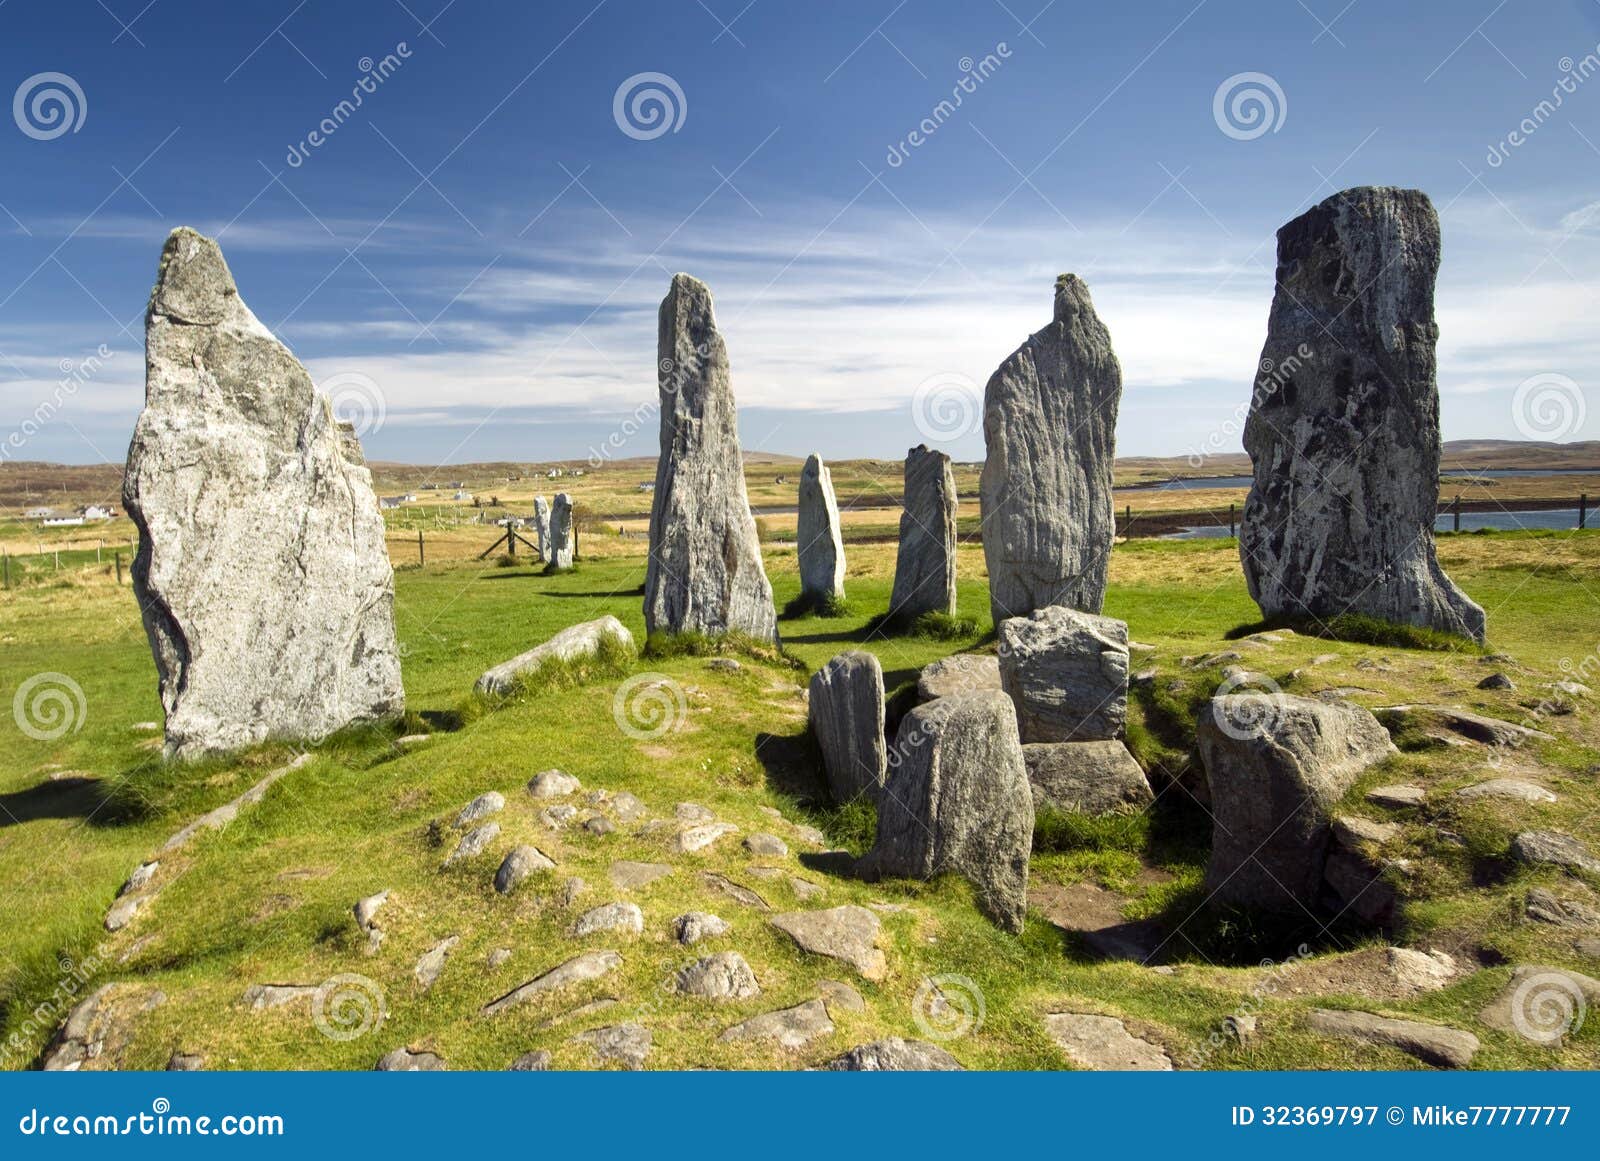 callanish standing stone circle, isle of lewis, scotland, uk.